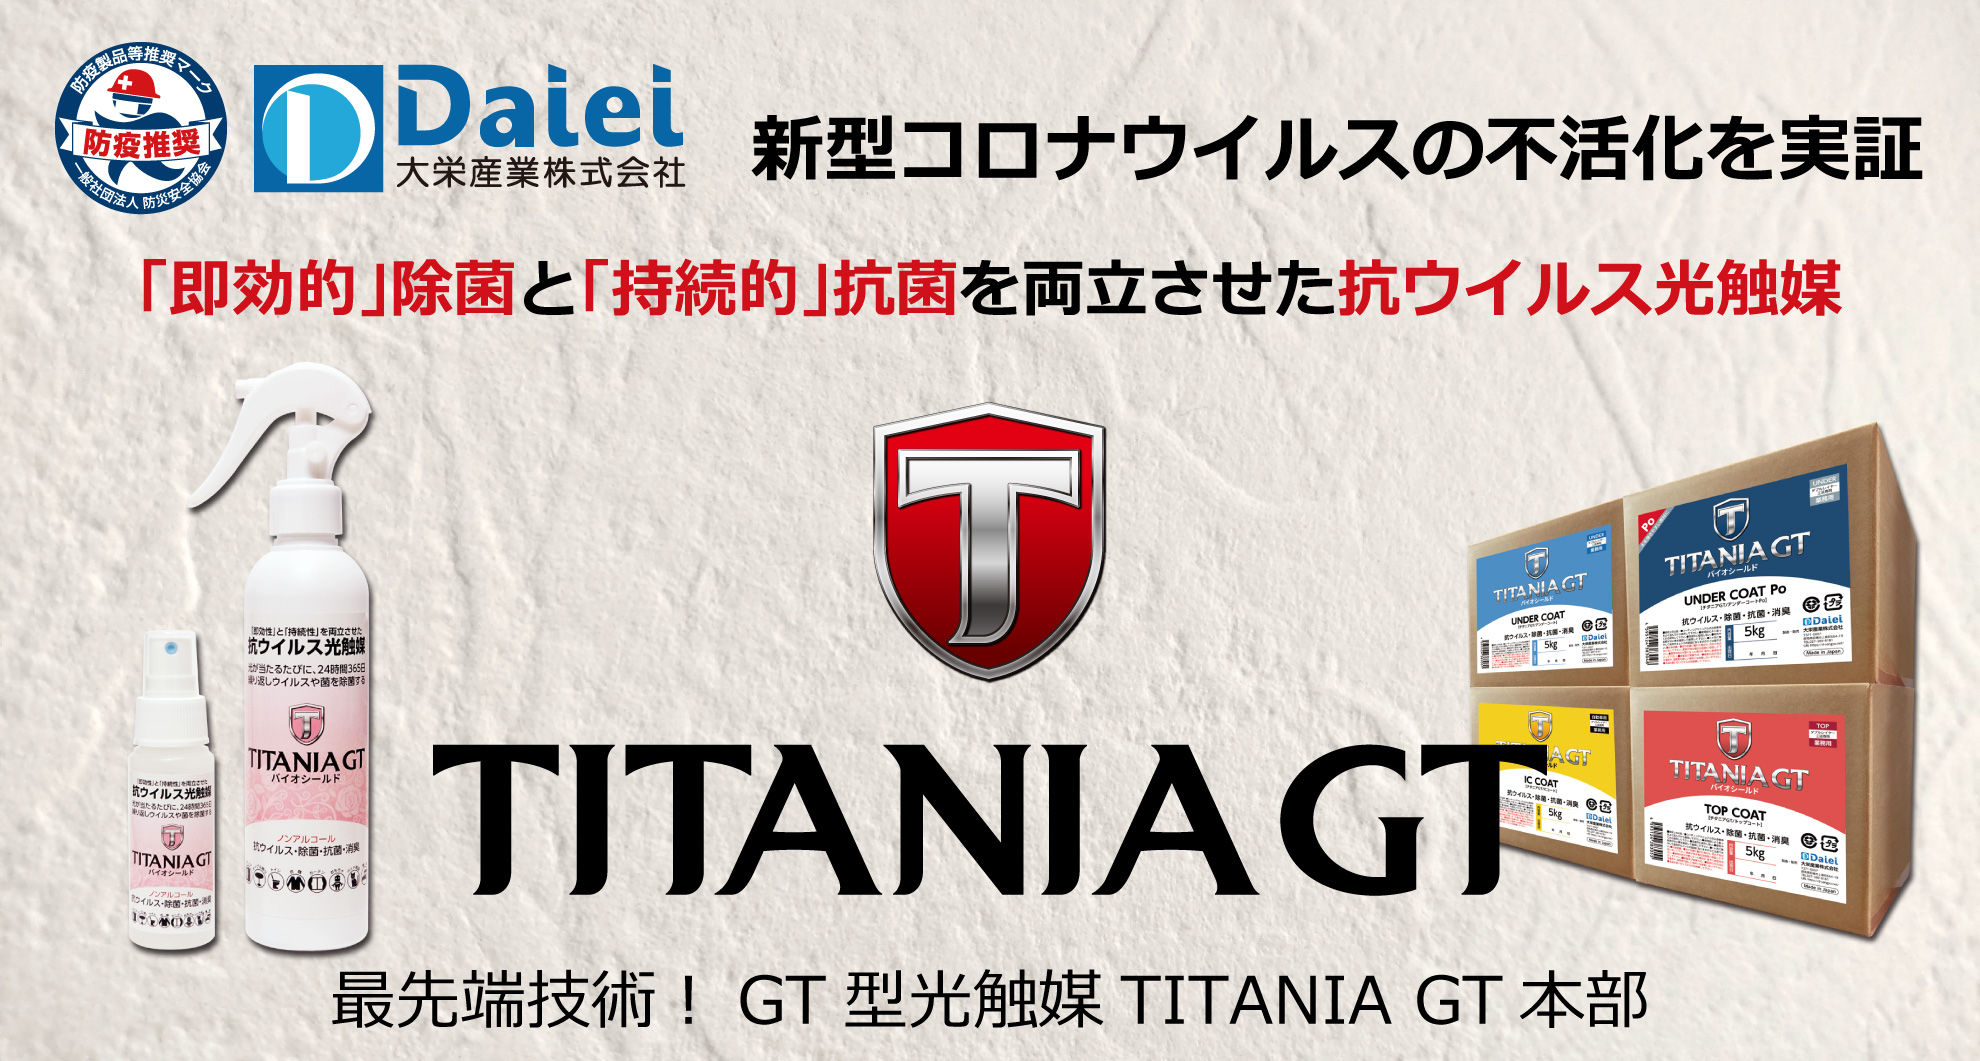 TITANIA GT